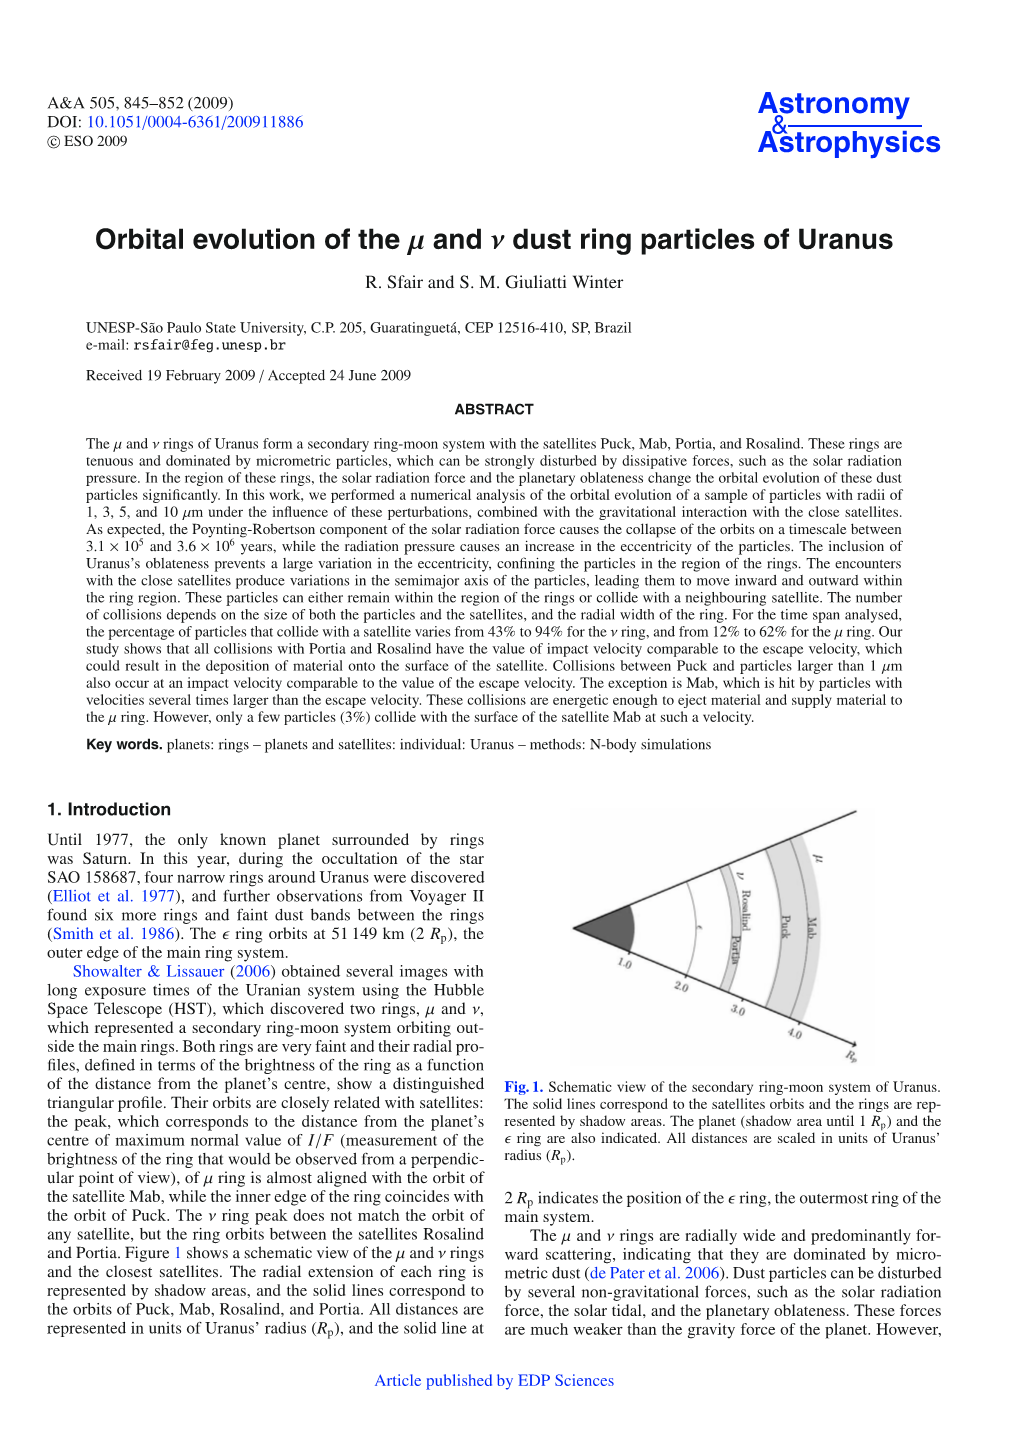 Orbital Evolution of the Μ and Ν Dust Ring Particles of Uranus